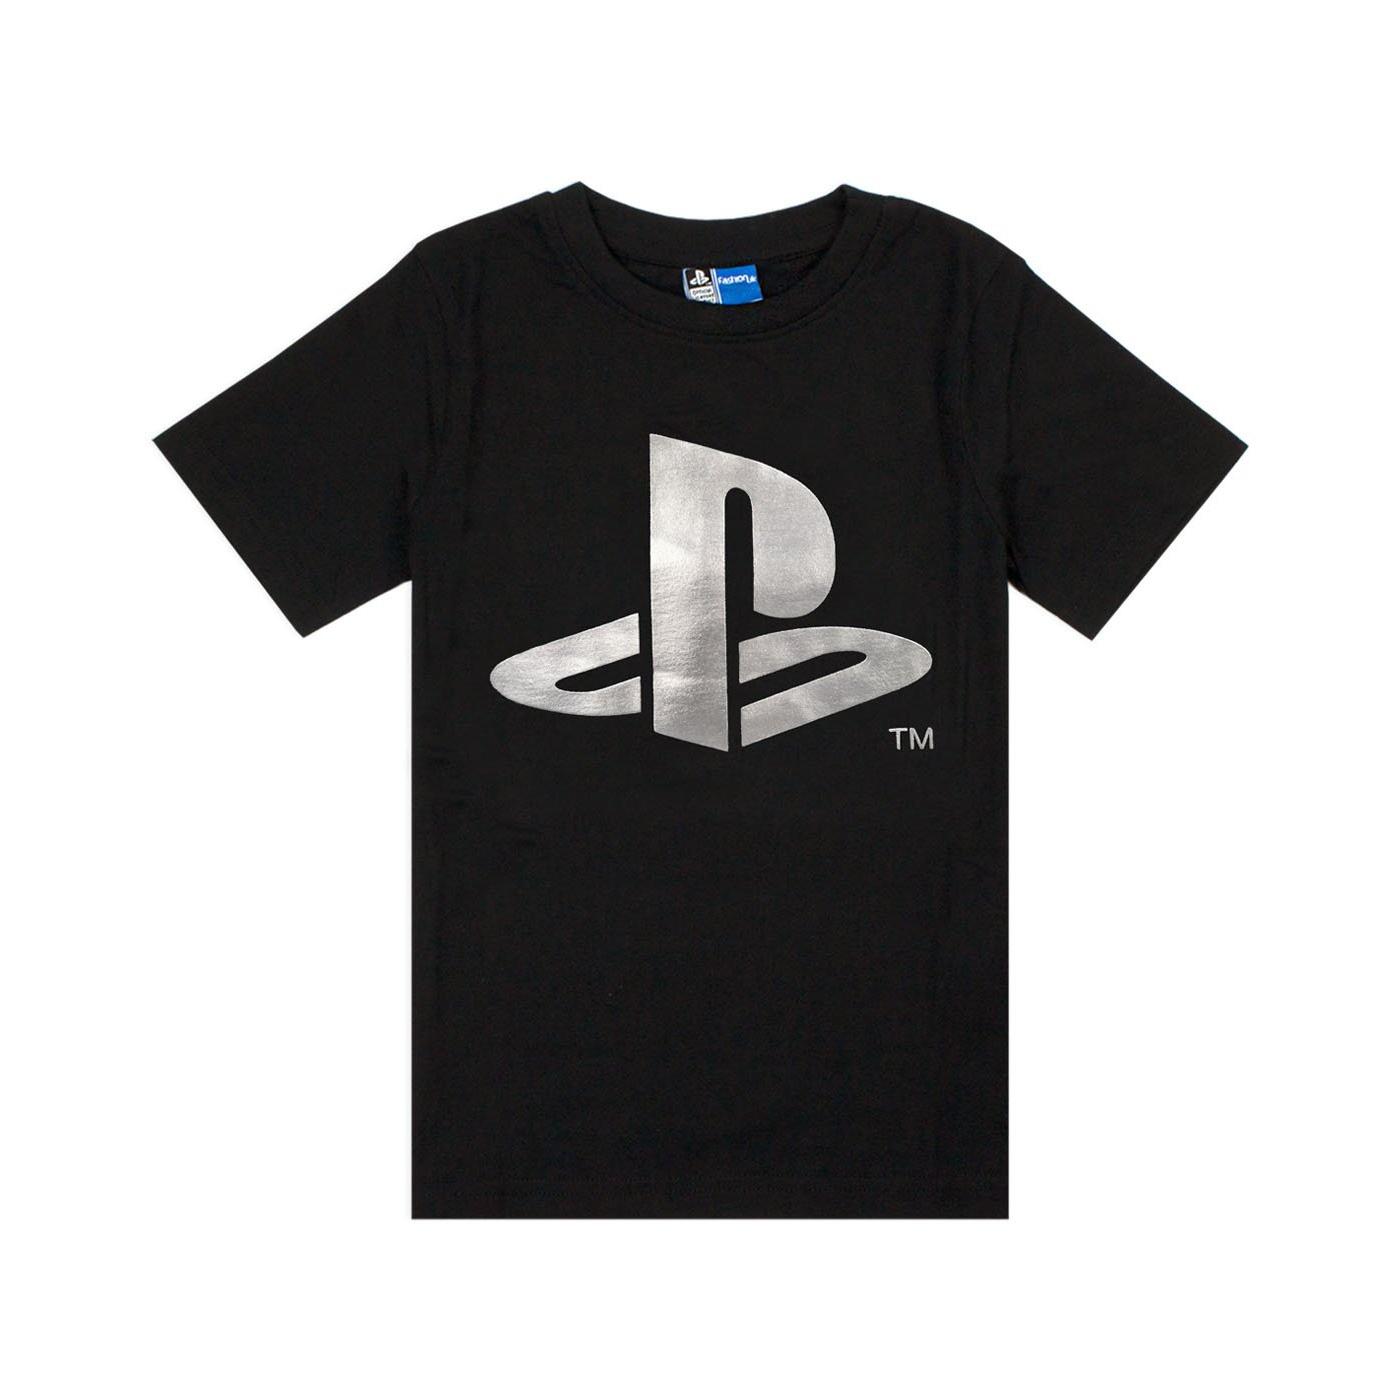 Playstation jongens logo folie T-shirt